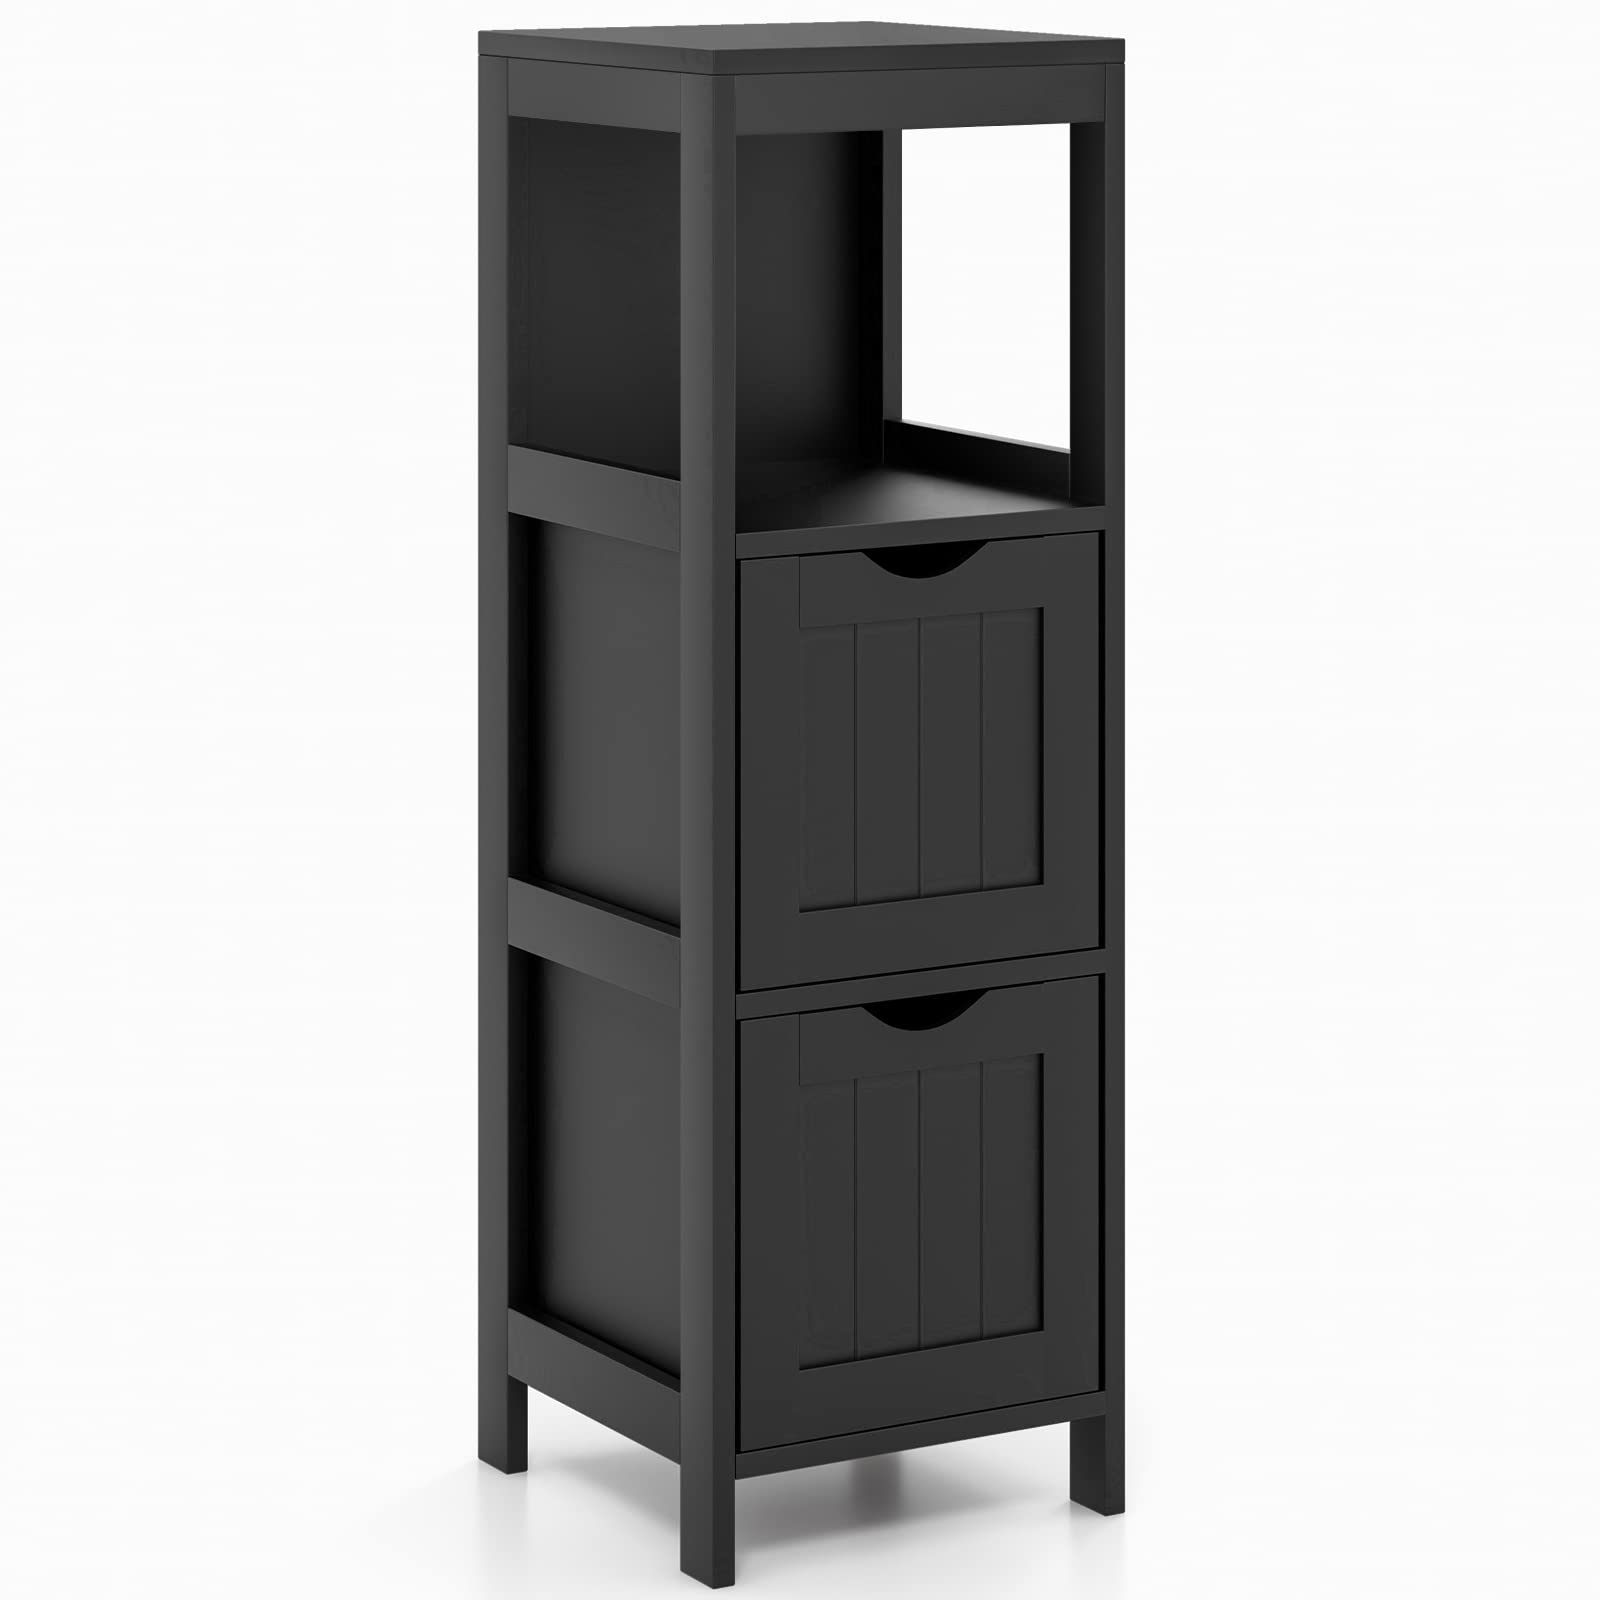 Giantex Slim Bathroom Storage Cabinet - Freestanding Storage Cabinet